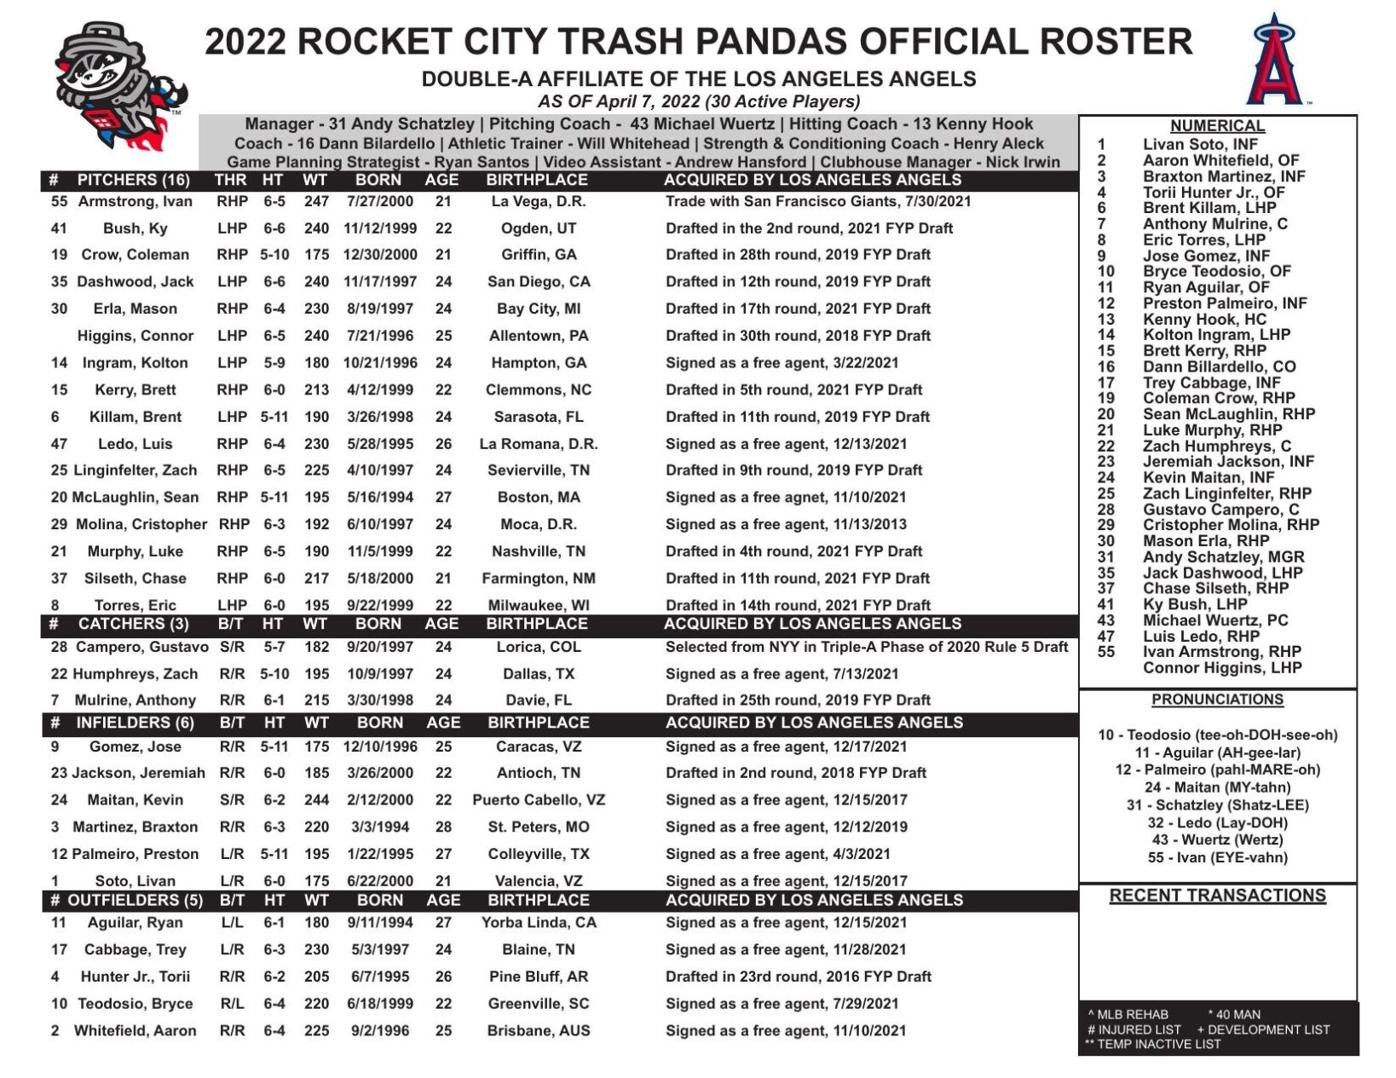 Rocket City Trash Pandas announce Season 2 roster, News